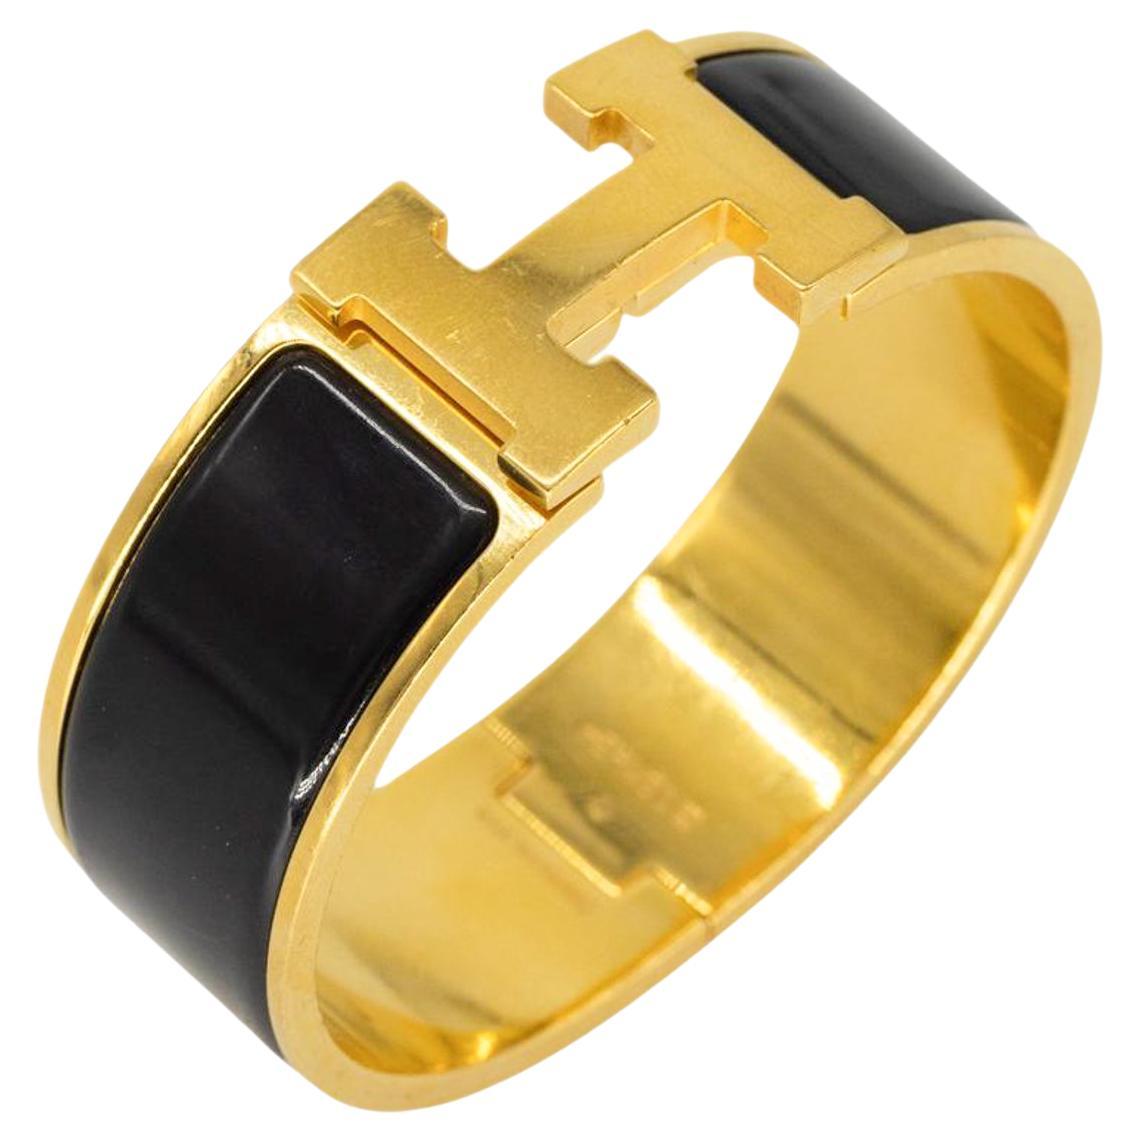 Hermès "Clic Clac" H Gold Plated Metal and Black Enamel Bracelet, 2011.